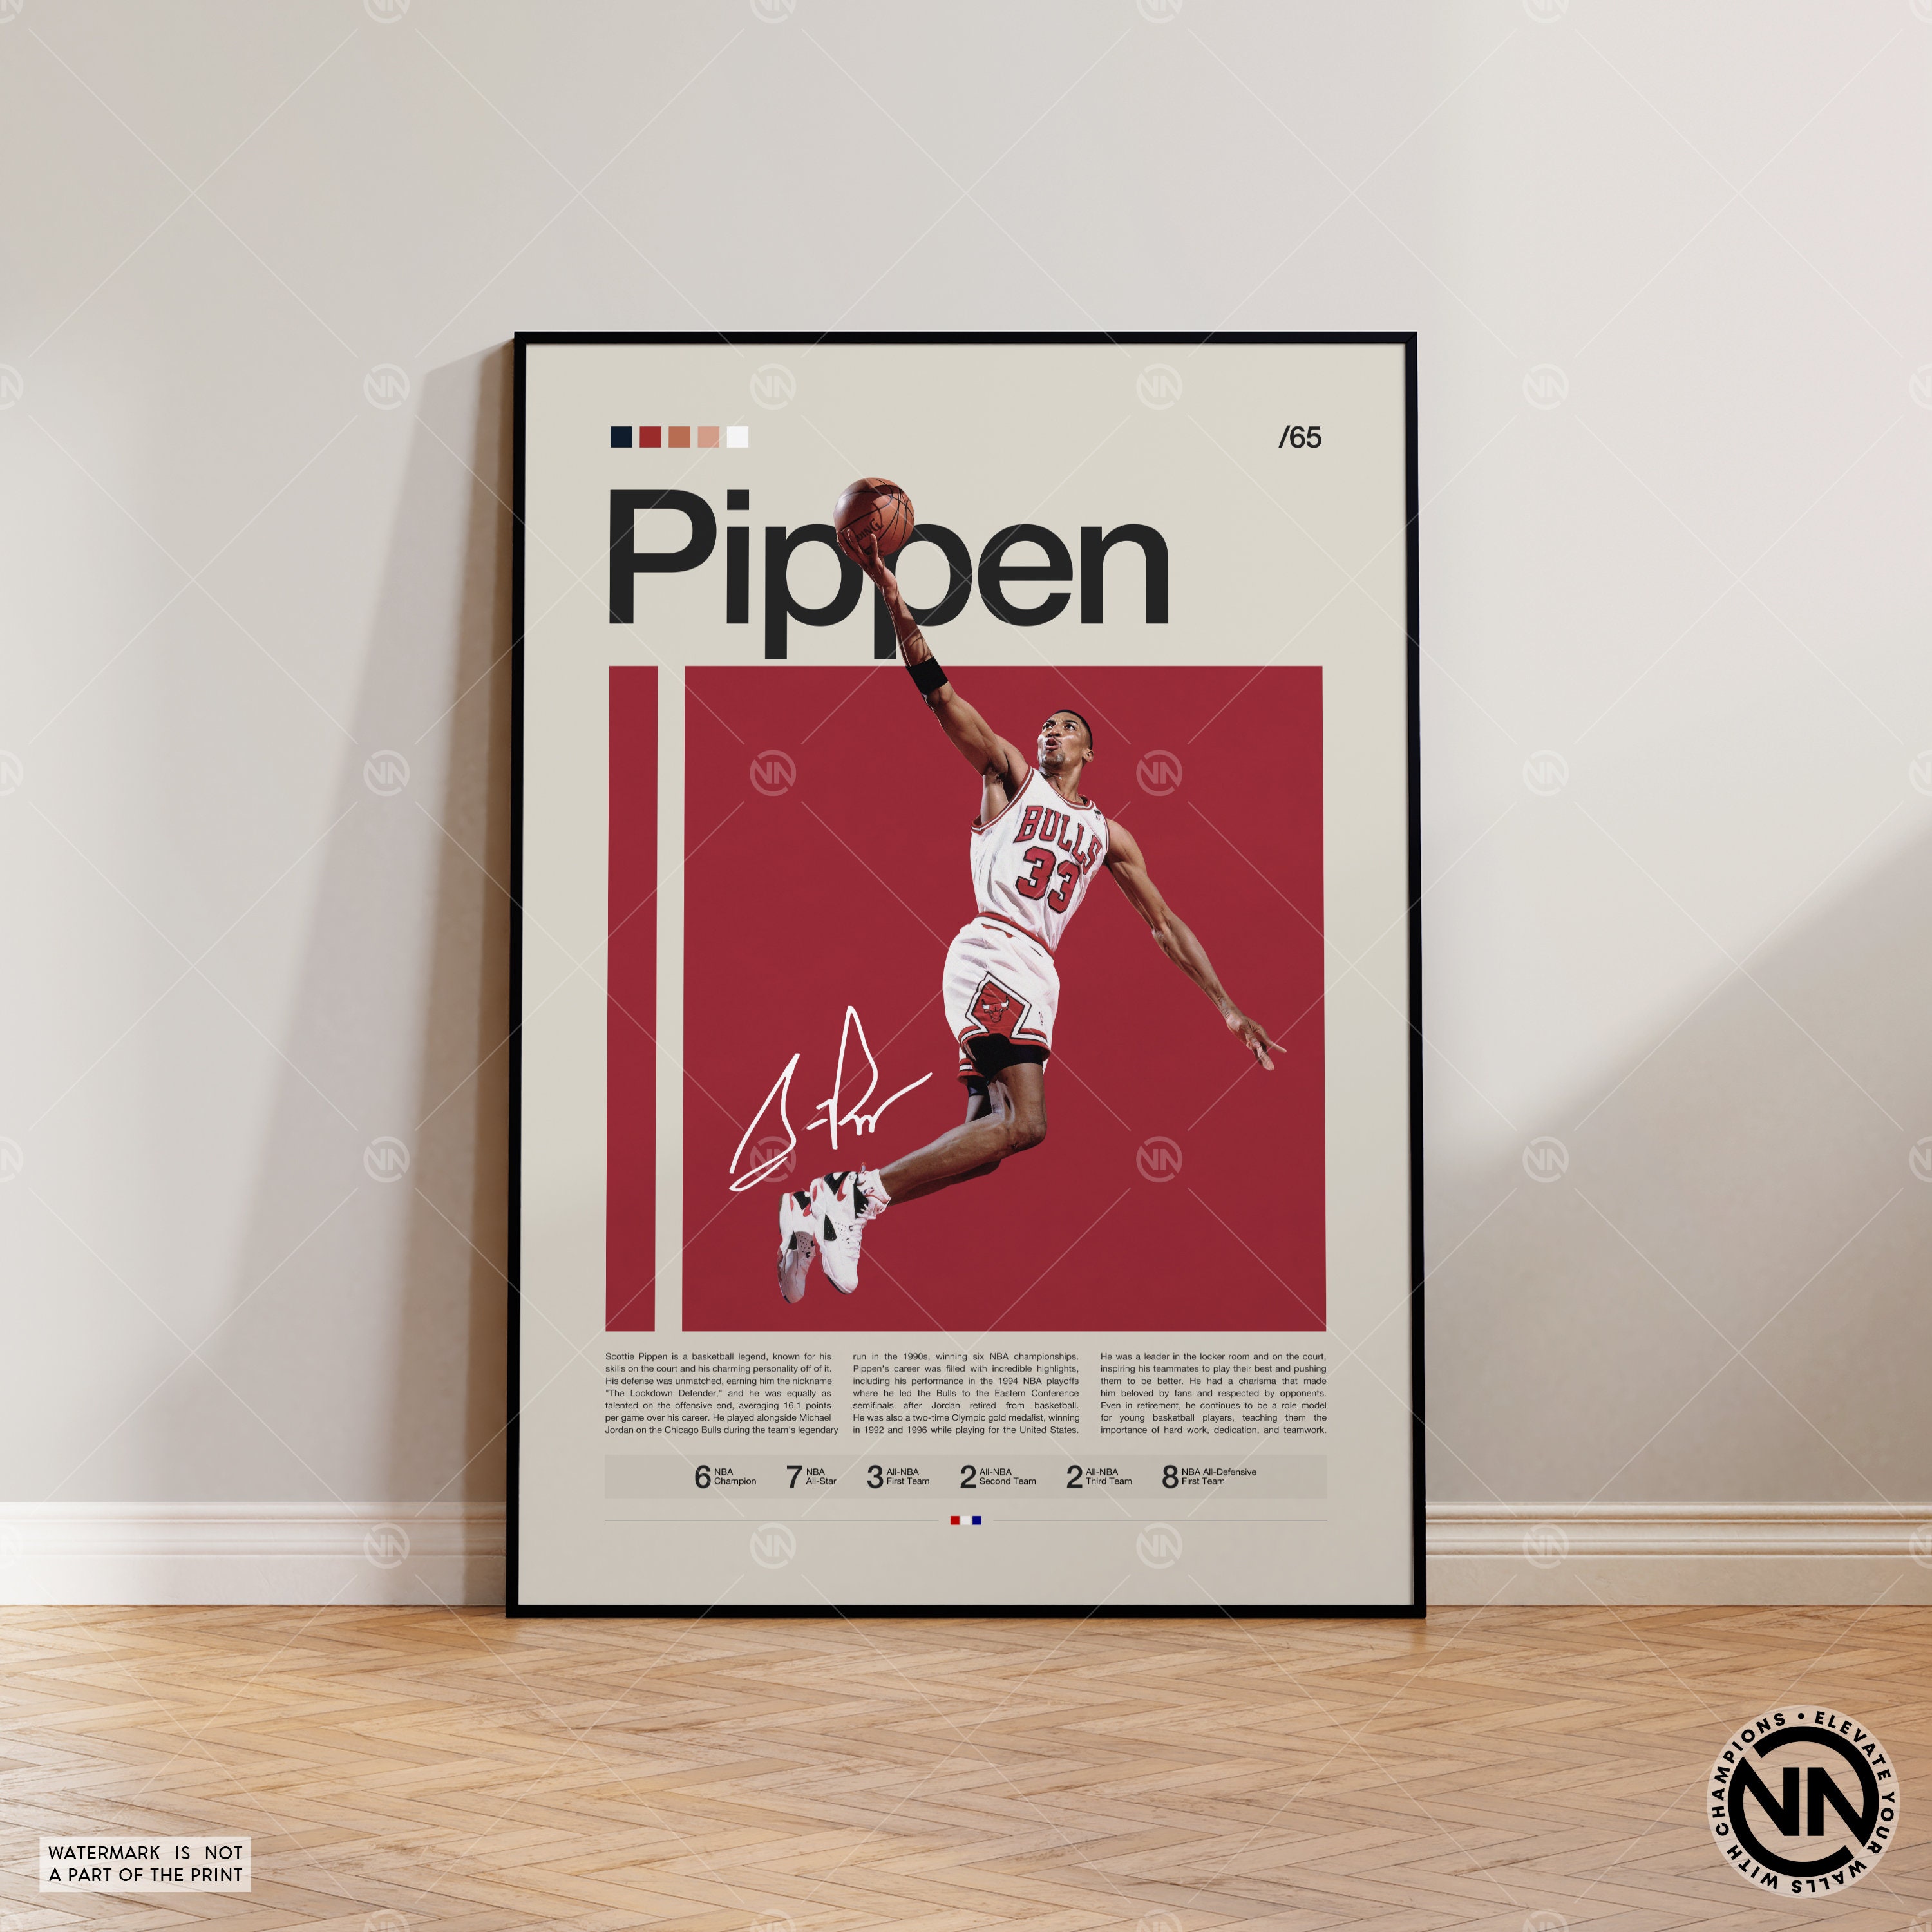 Scottie Pippen Poster - Etsy